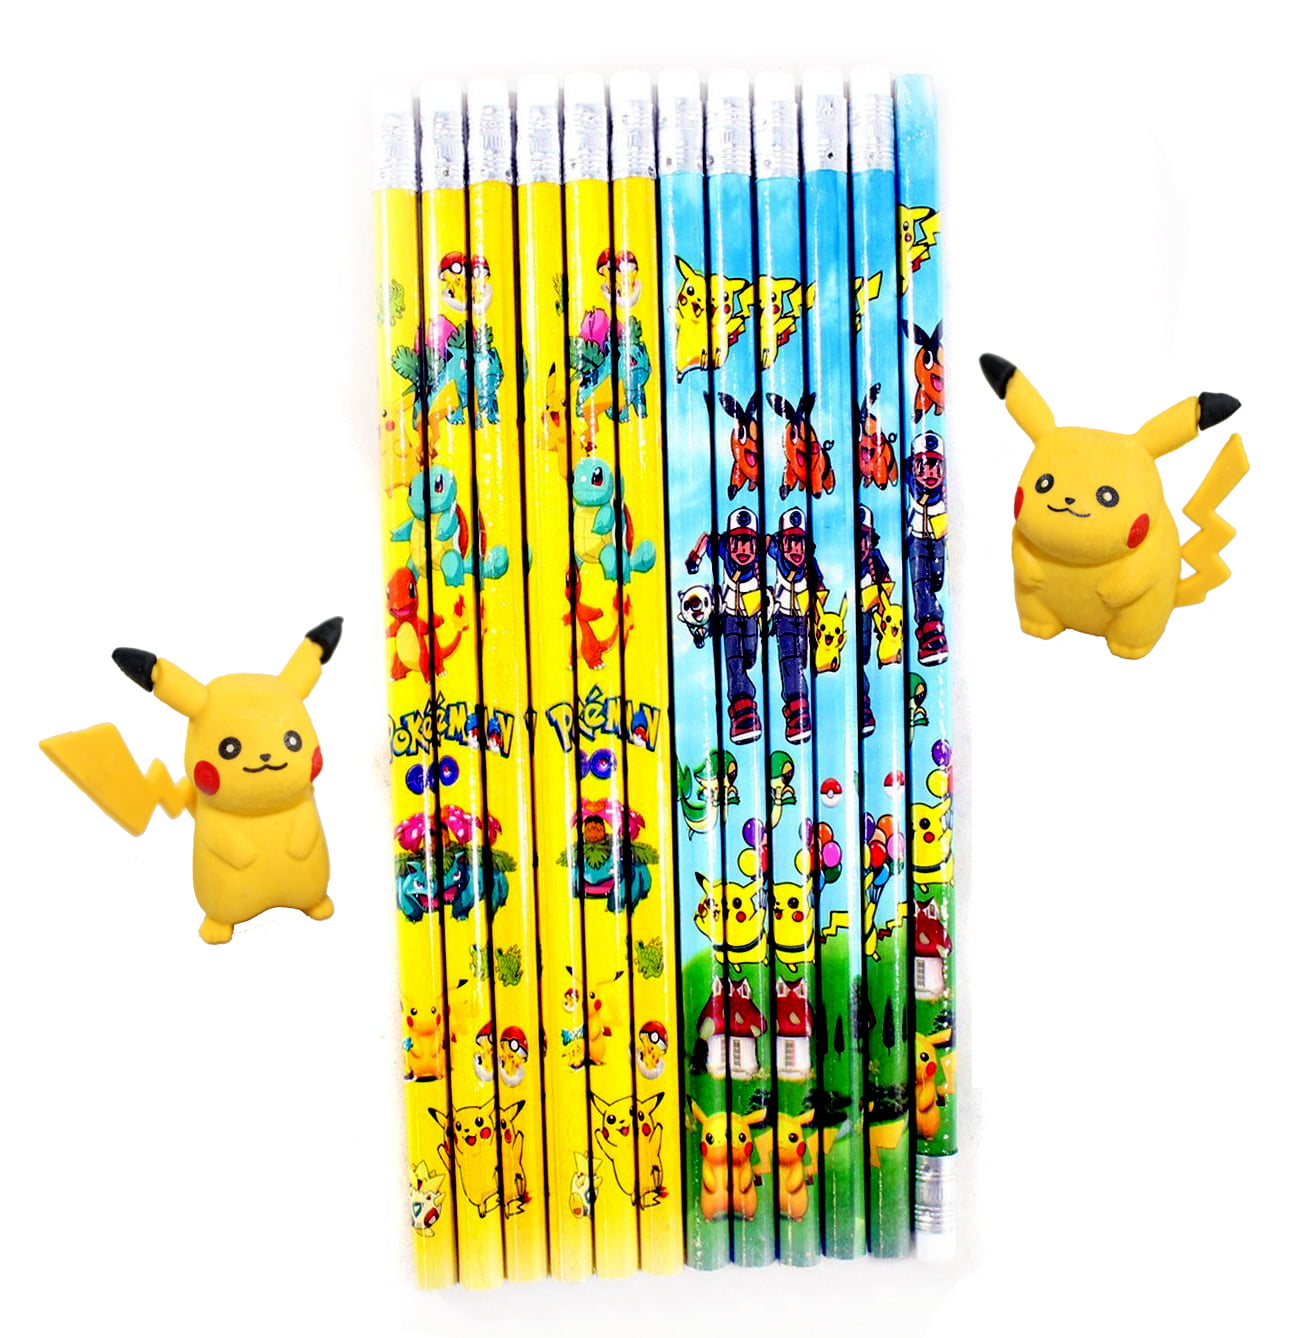 Pikachu Pencils with Eraser, 2B Triangular Pencils 12 Count (Yellow)